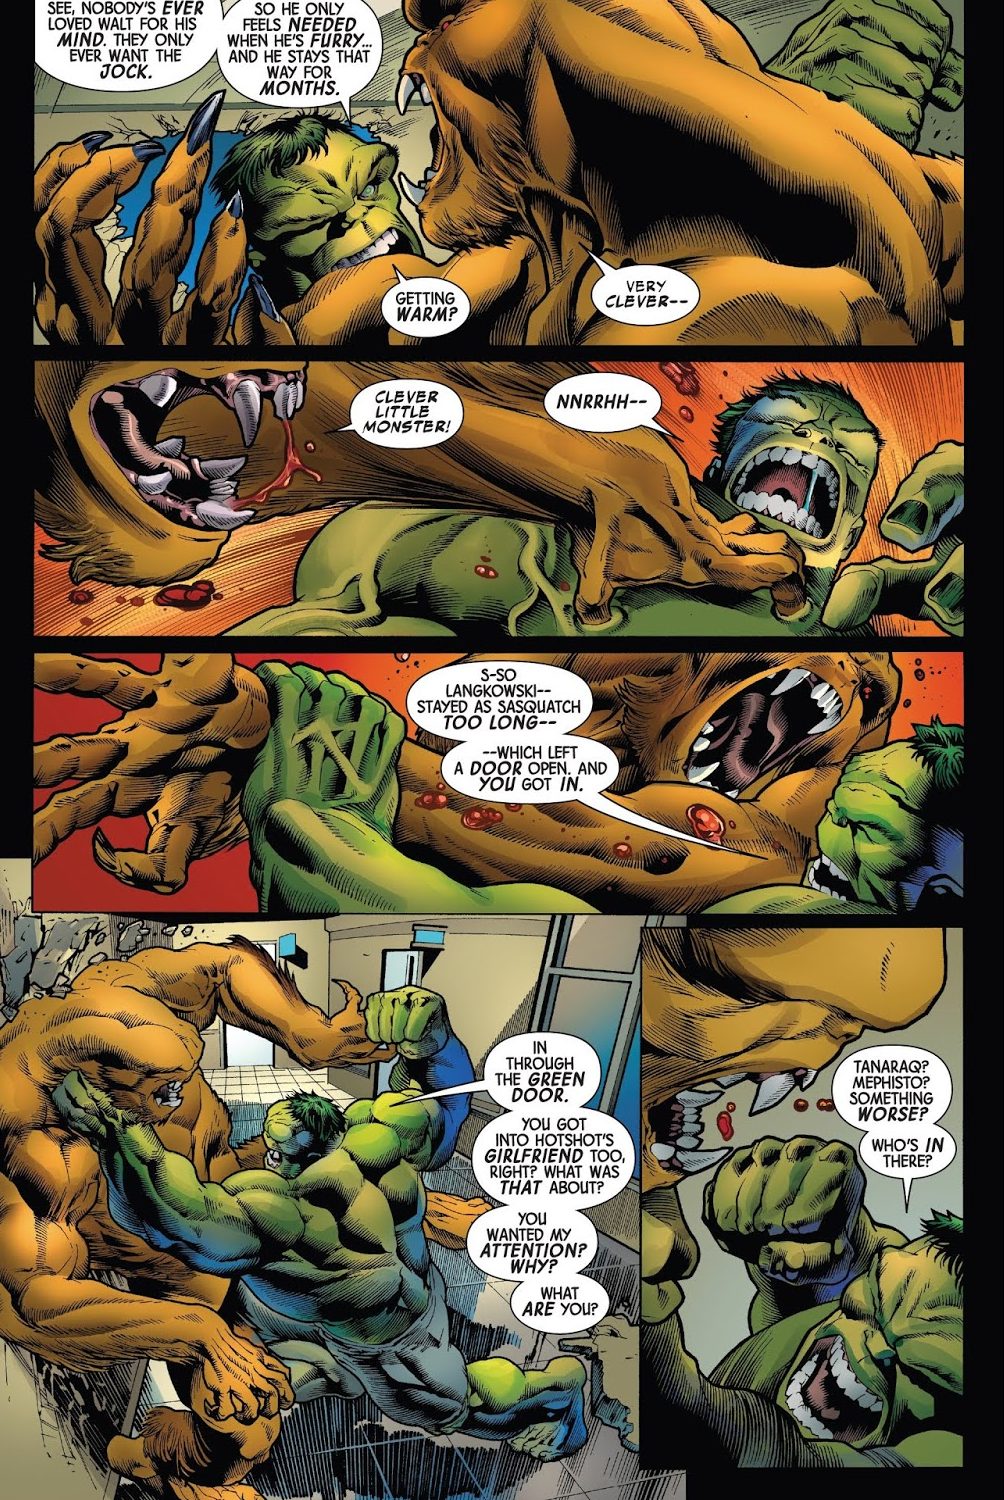 The Immortal Hulk VS Sasquatch